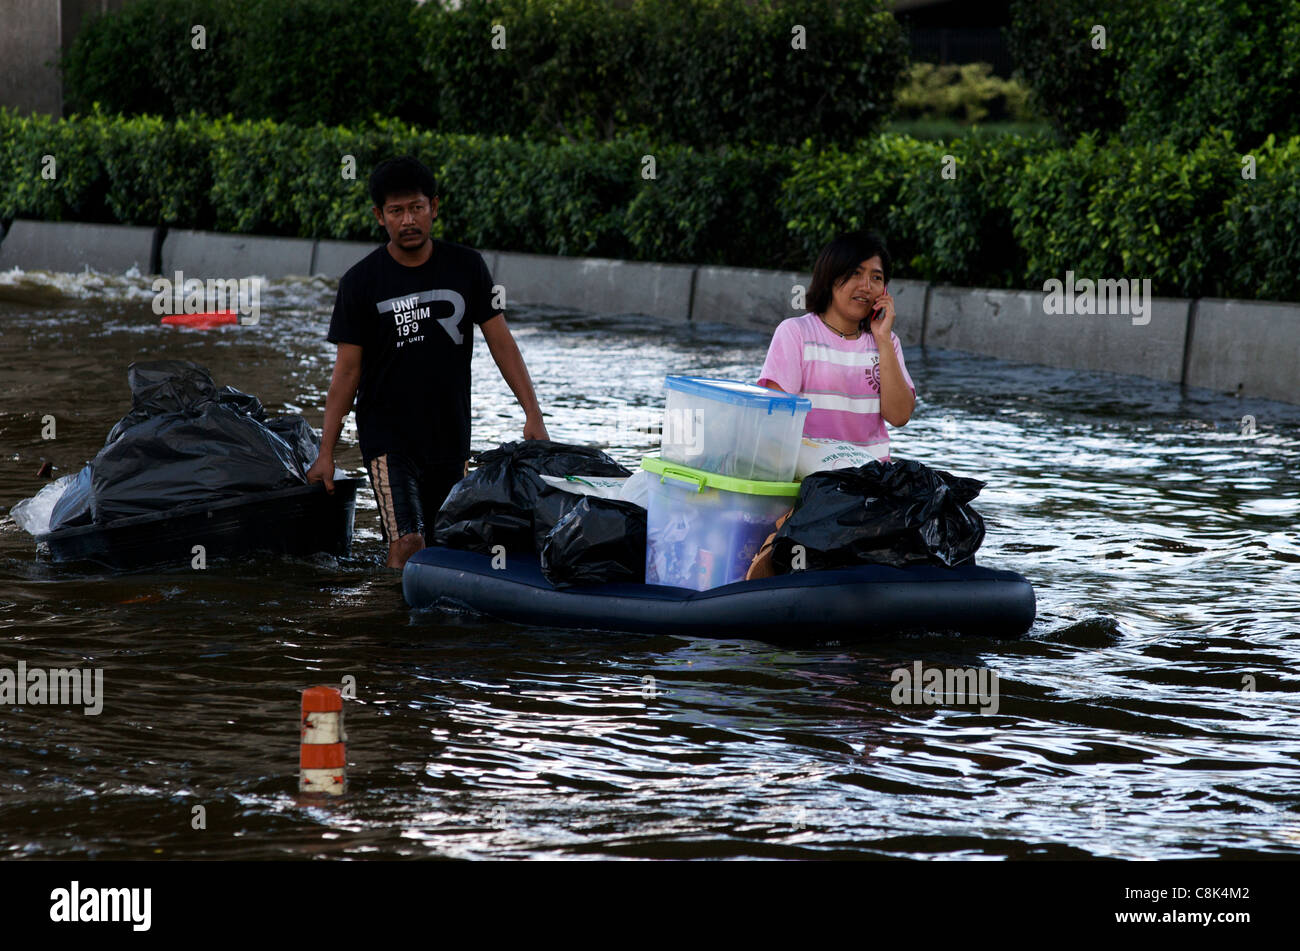 Thai refugees wade through the flood, one talking on a cel phone, at Don Muang airport, Bangkok, Thailand, South East Asia. credit: Kraig Lieb Stock Photo